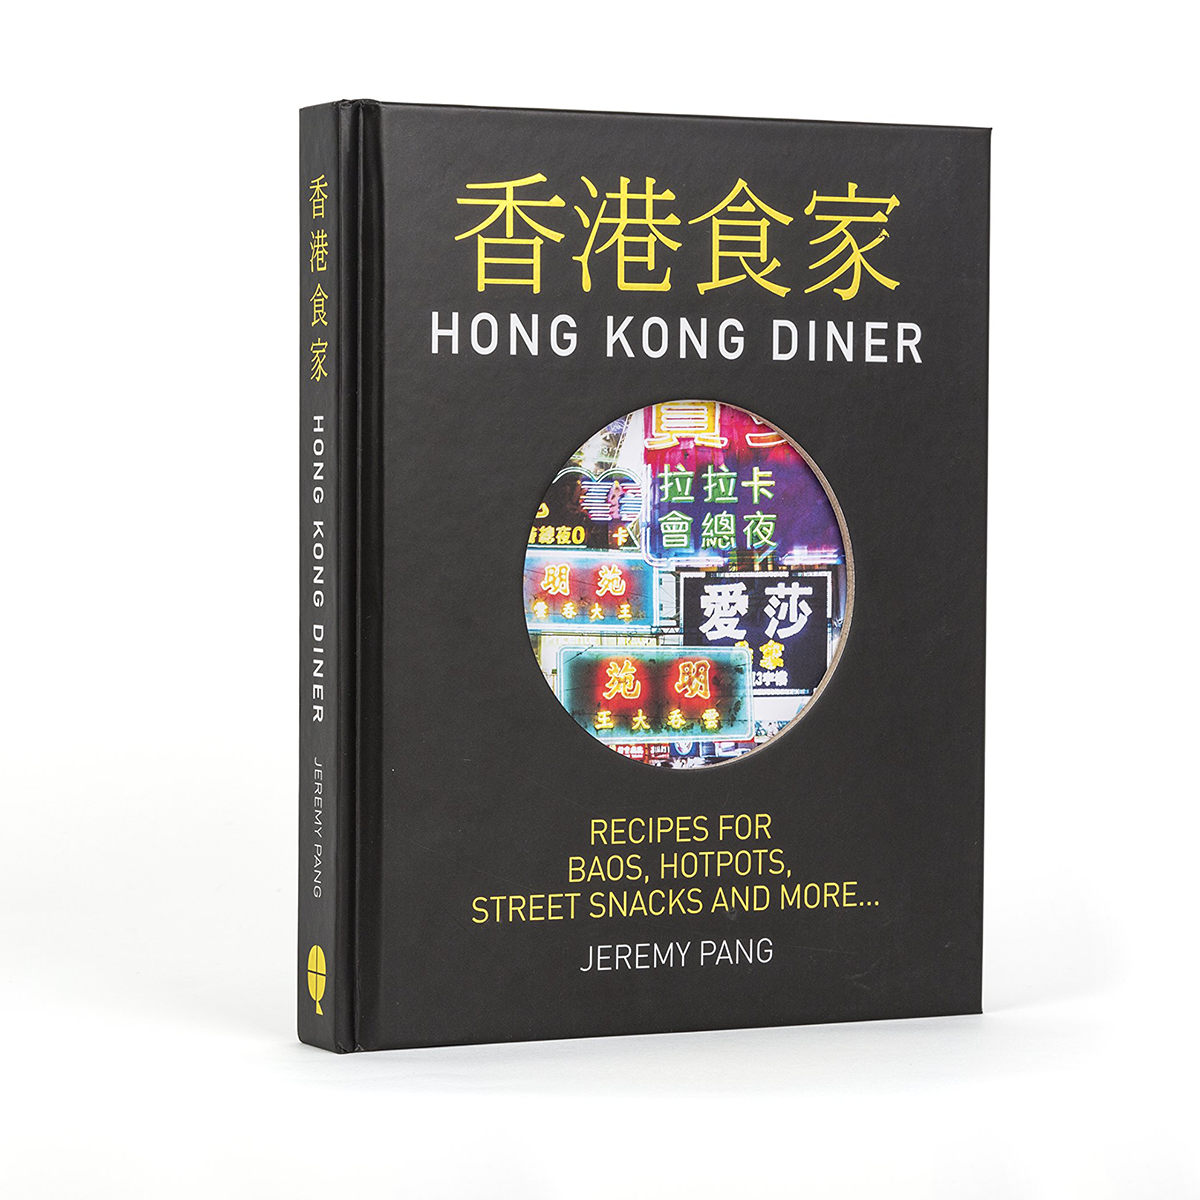 Hong Kong Diner Cook Book